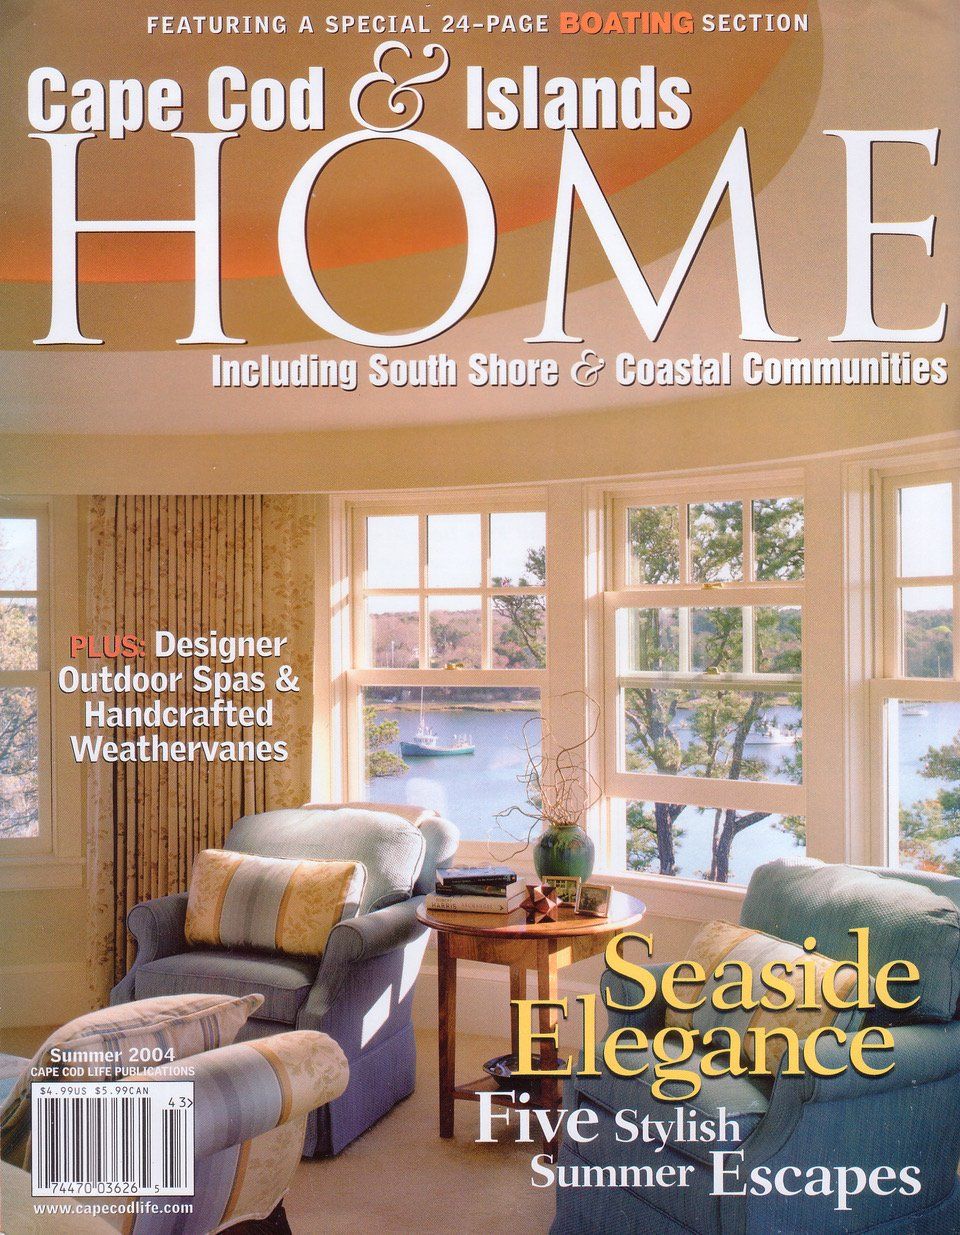 Galloway Fine Furniture in Cape Cod & Islands Home Magazine